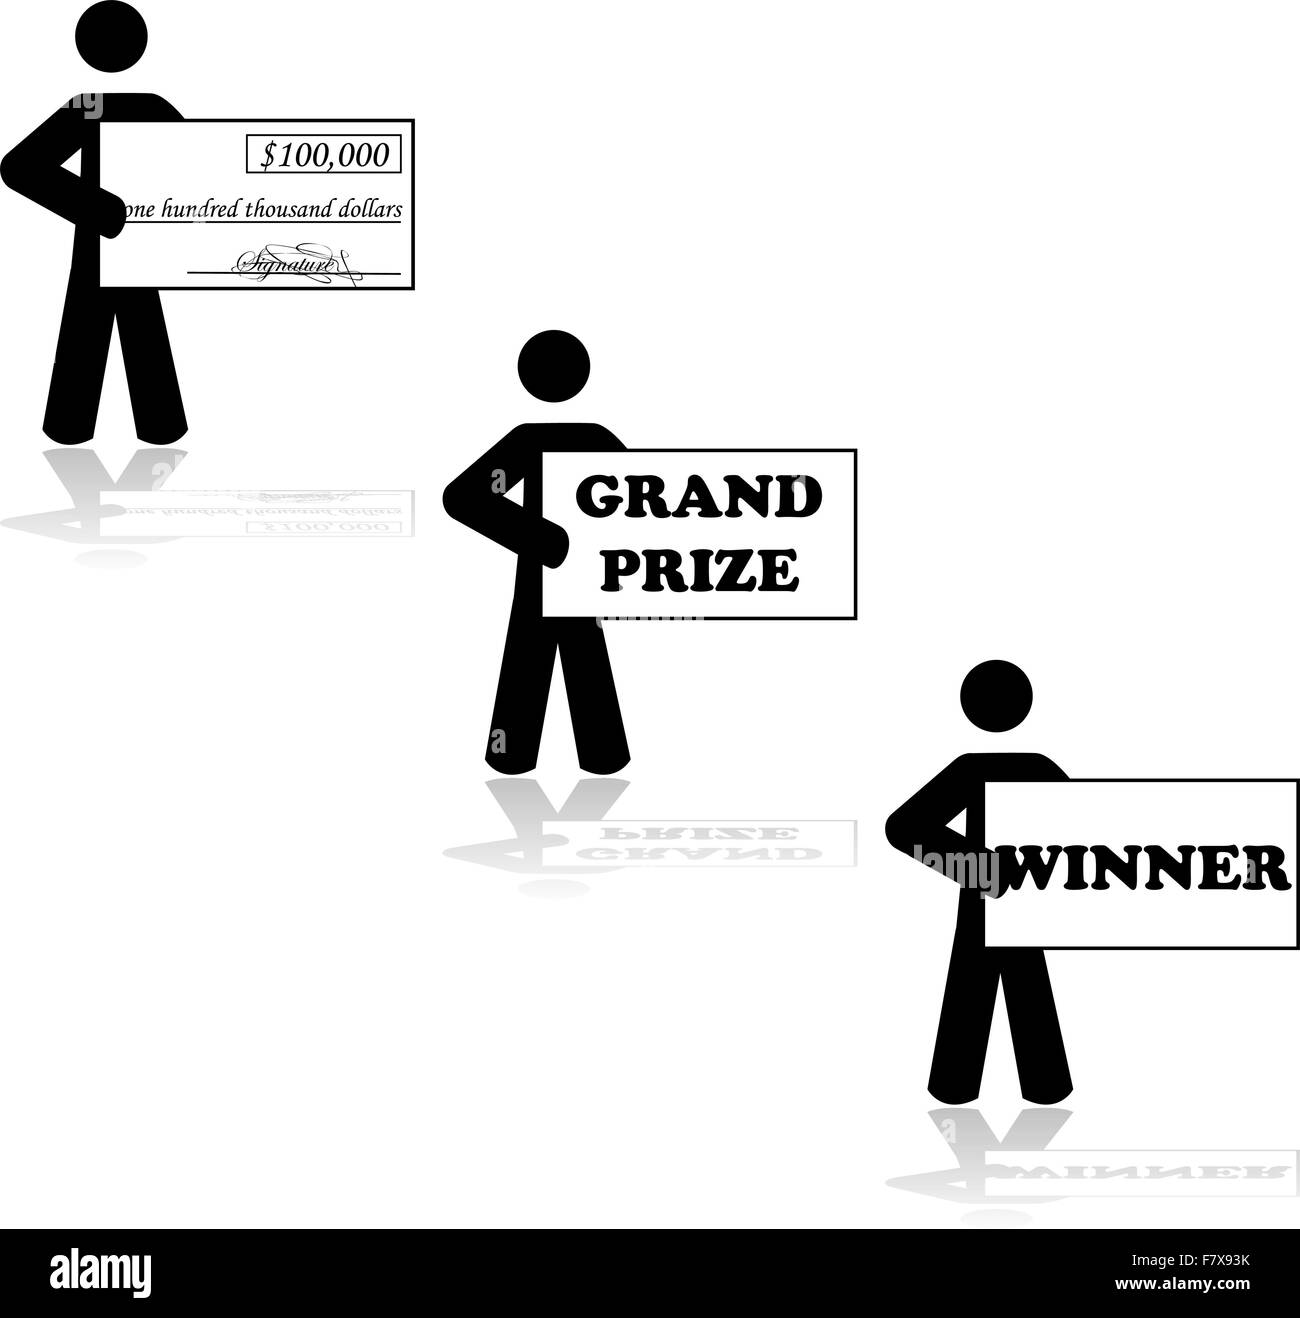 Grand prize winner Stock Vector